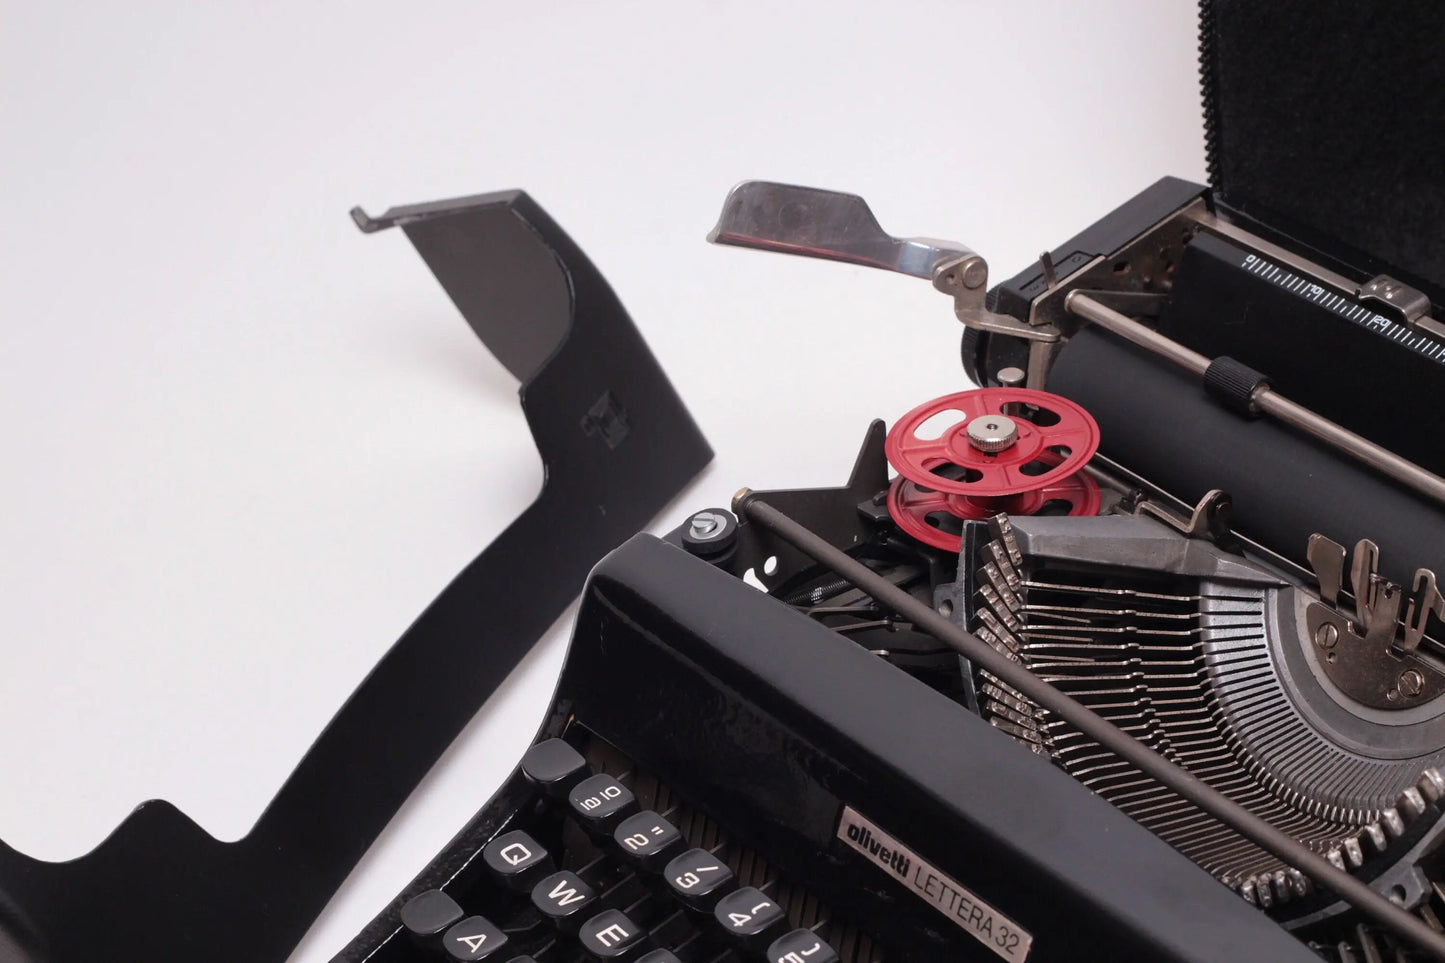 Limited Edition Olivetti Lettera 32 Black Typewriter, Vintage, Manual Portable, Professionally Serviced by Typewriter.Company - ElGranero Typewriter.Company